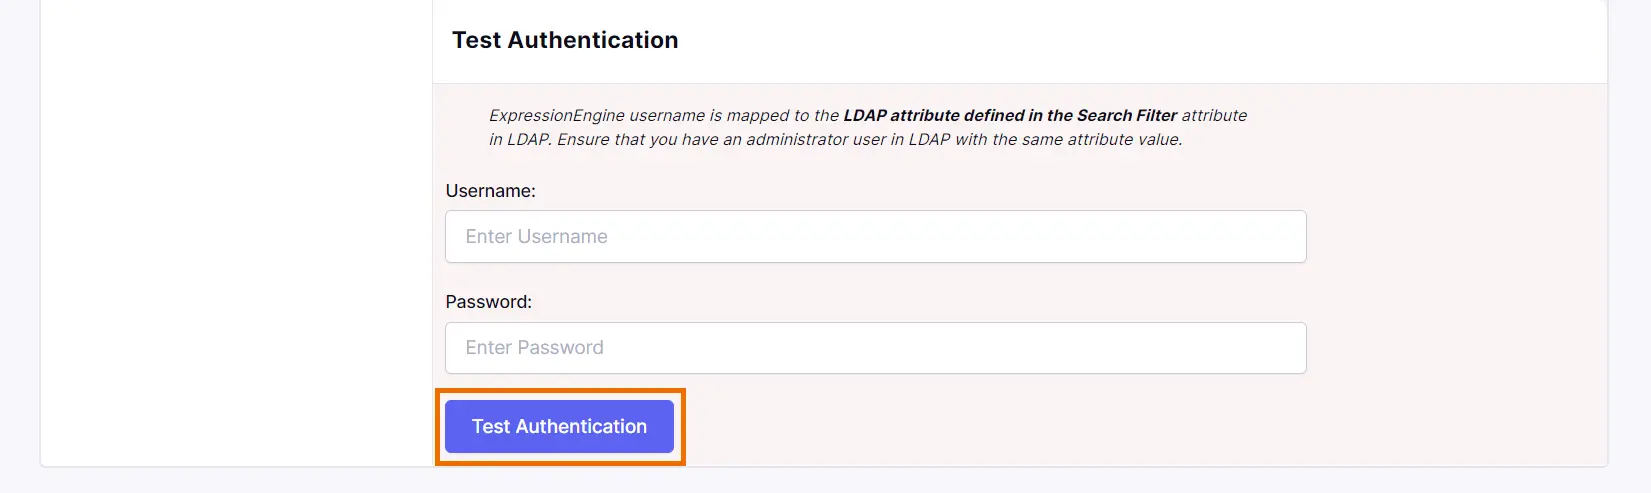 LDAP integration for ExpressionEngine Test user authentication